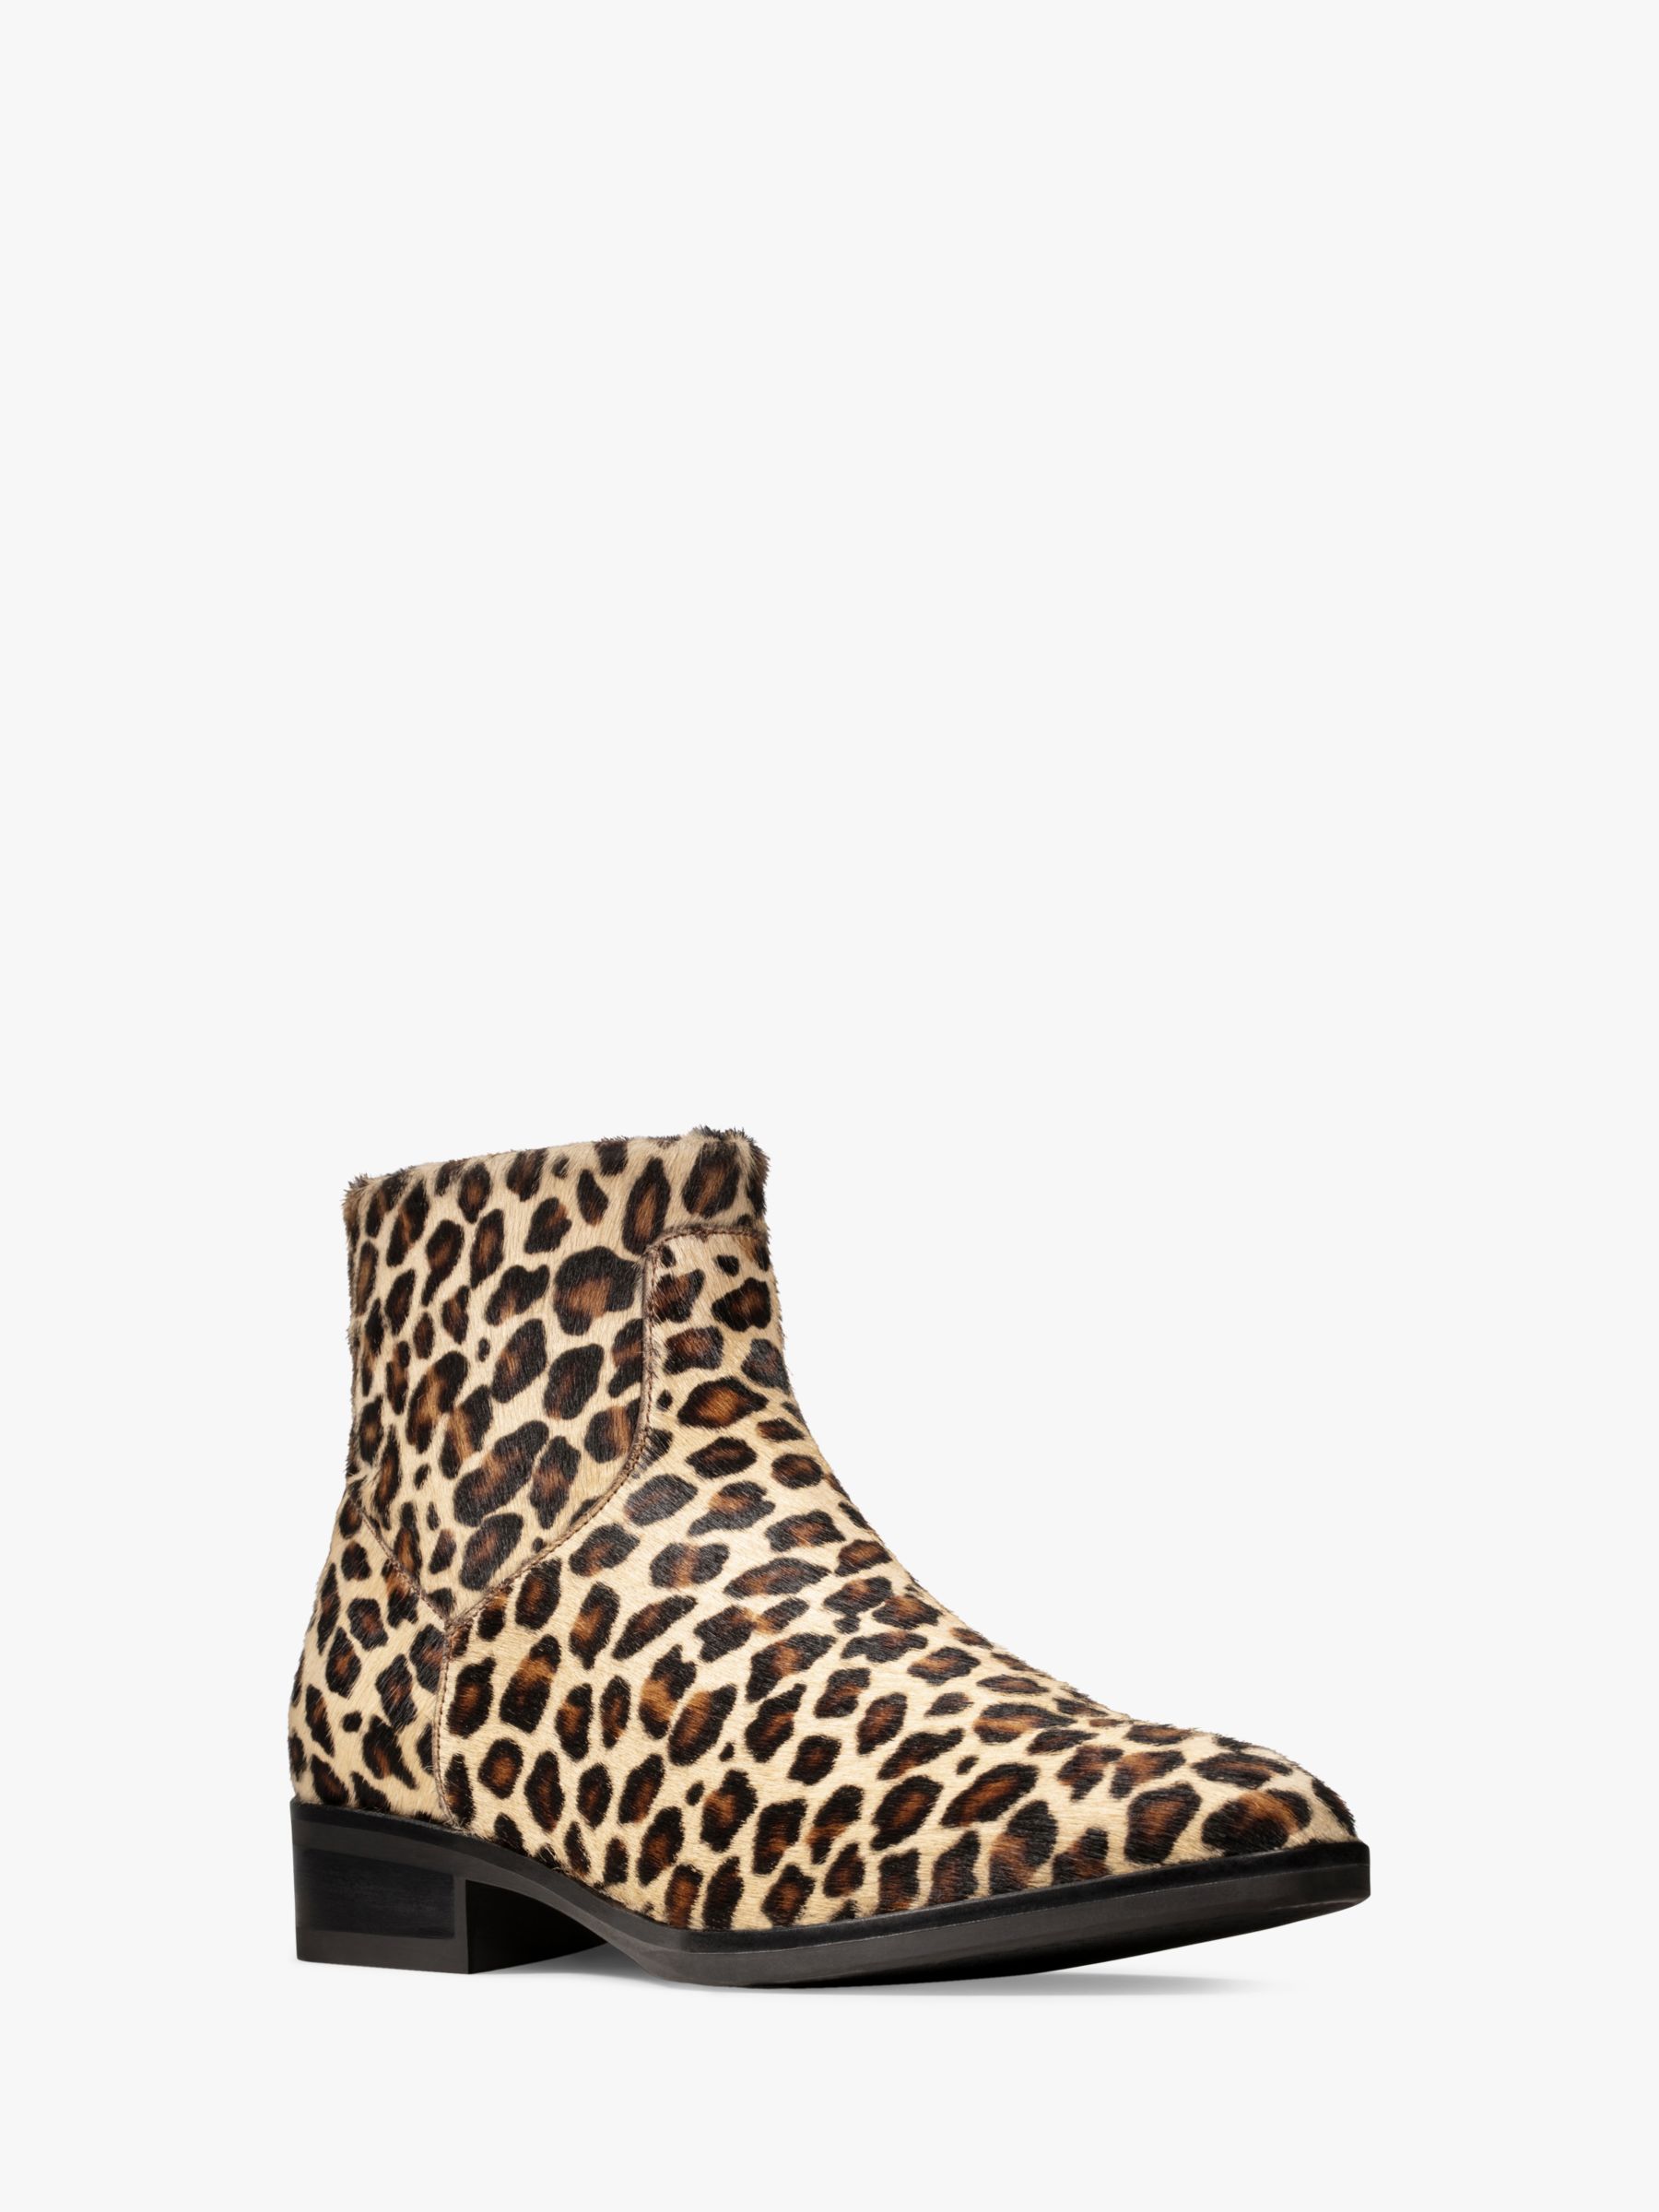 clarks leopard print boots